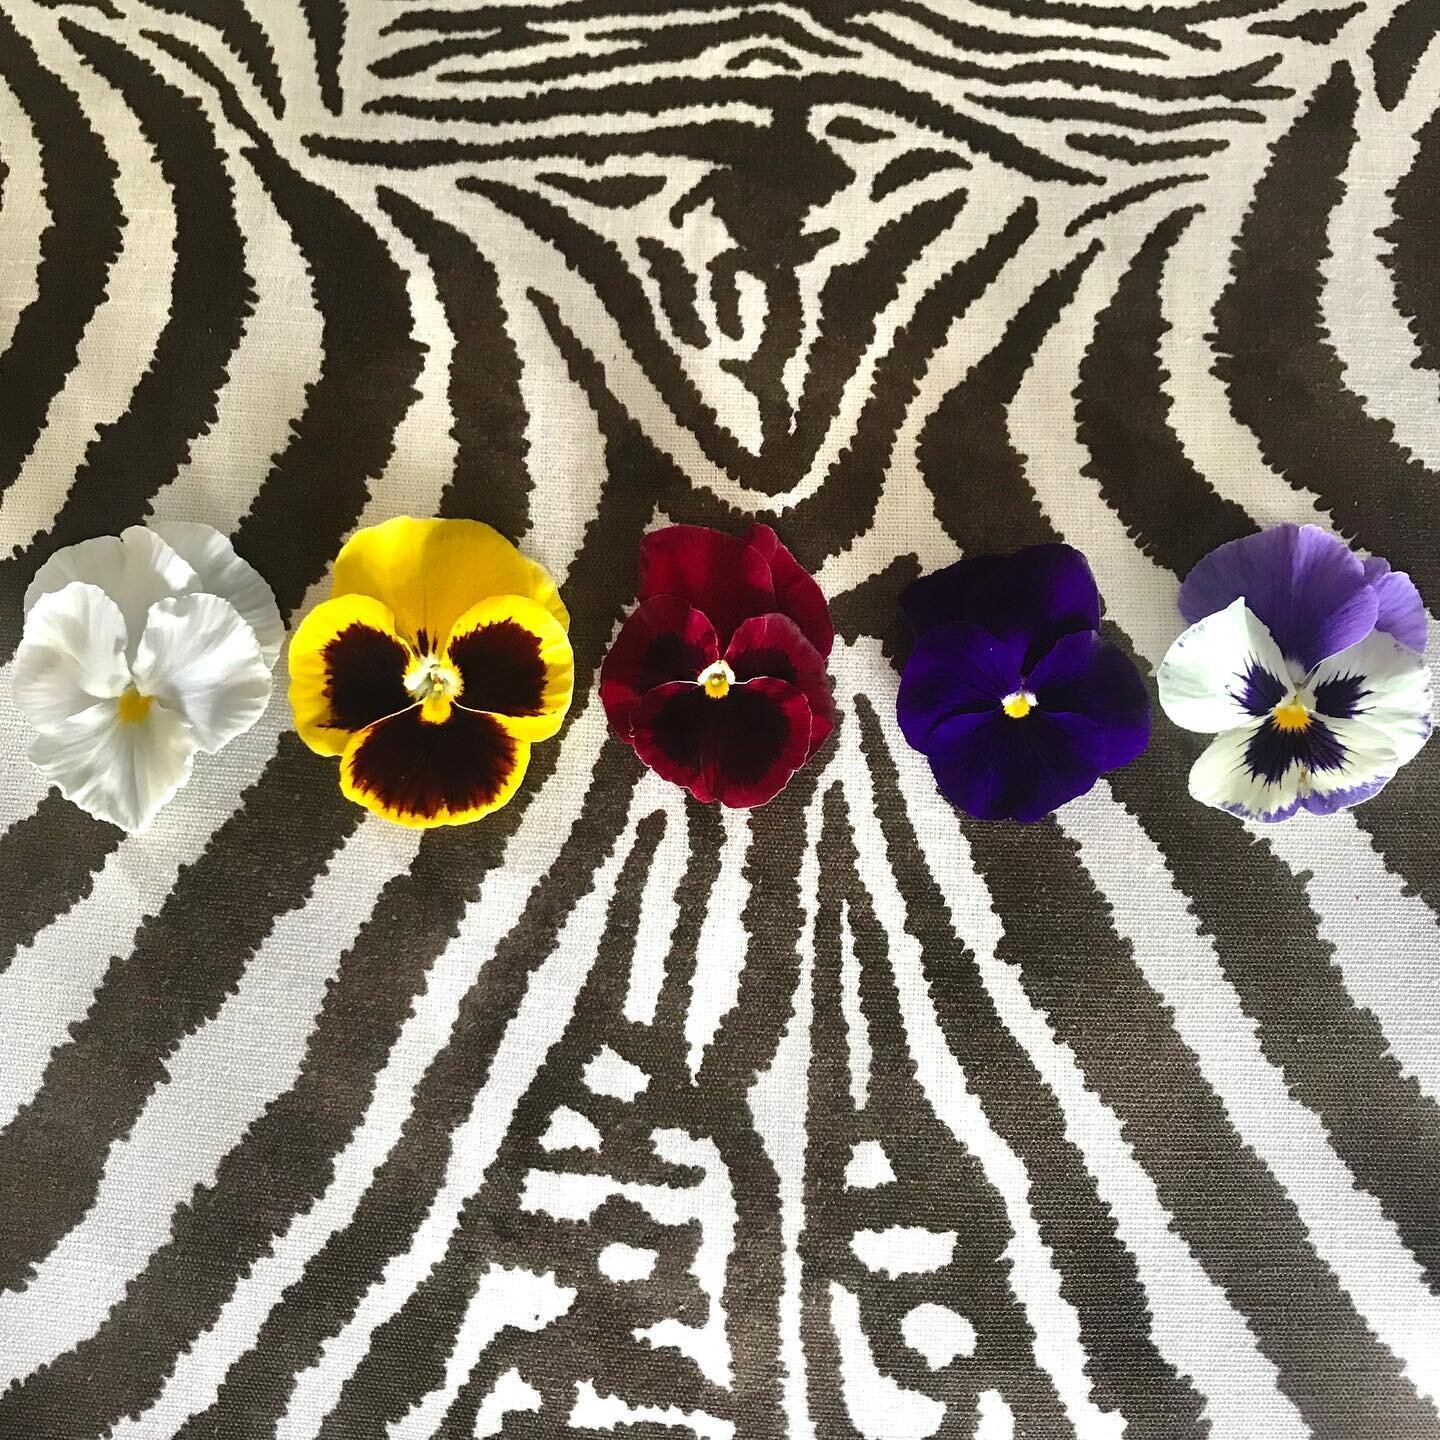 Pansy Pals 💜💛

___________________________________________

#interiors #interior #houseofhackney #flowers #homegrown #flower #pansy #pansyflower #pansypals #decor #interiordetails #interiordesign #interiordecor #upholstery #zebra #zebraprint #zebra